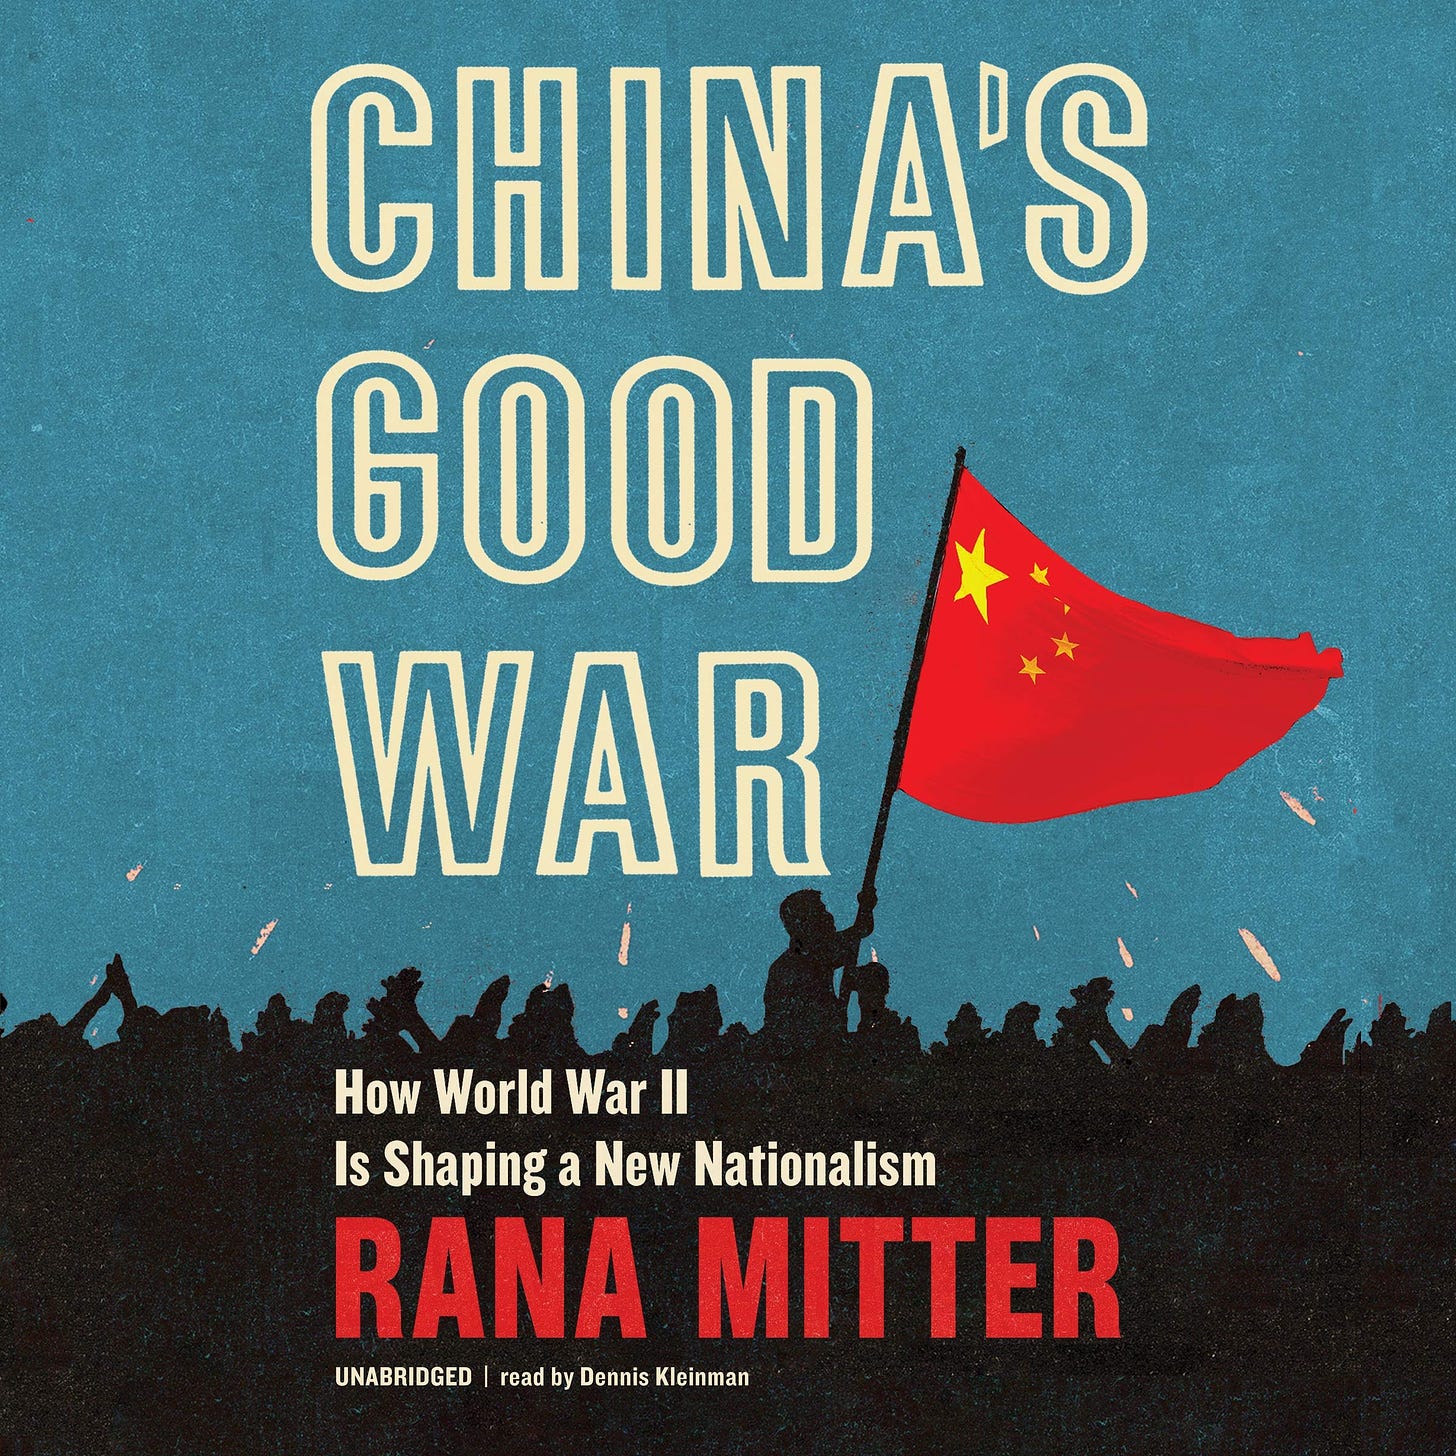 Amazon.co.uk: Rana Mitter: books, biography, latest update